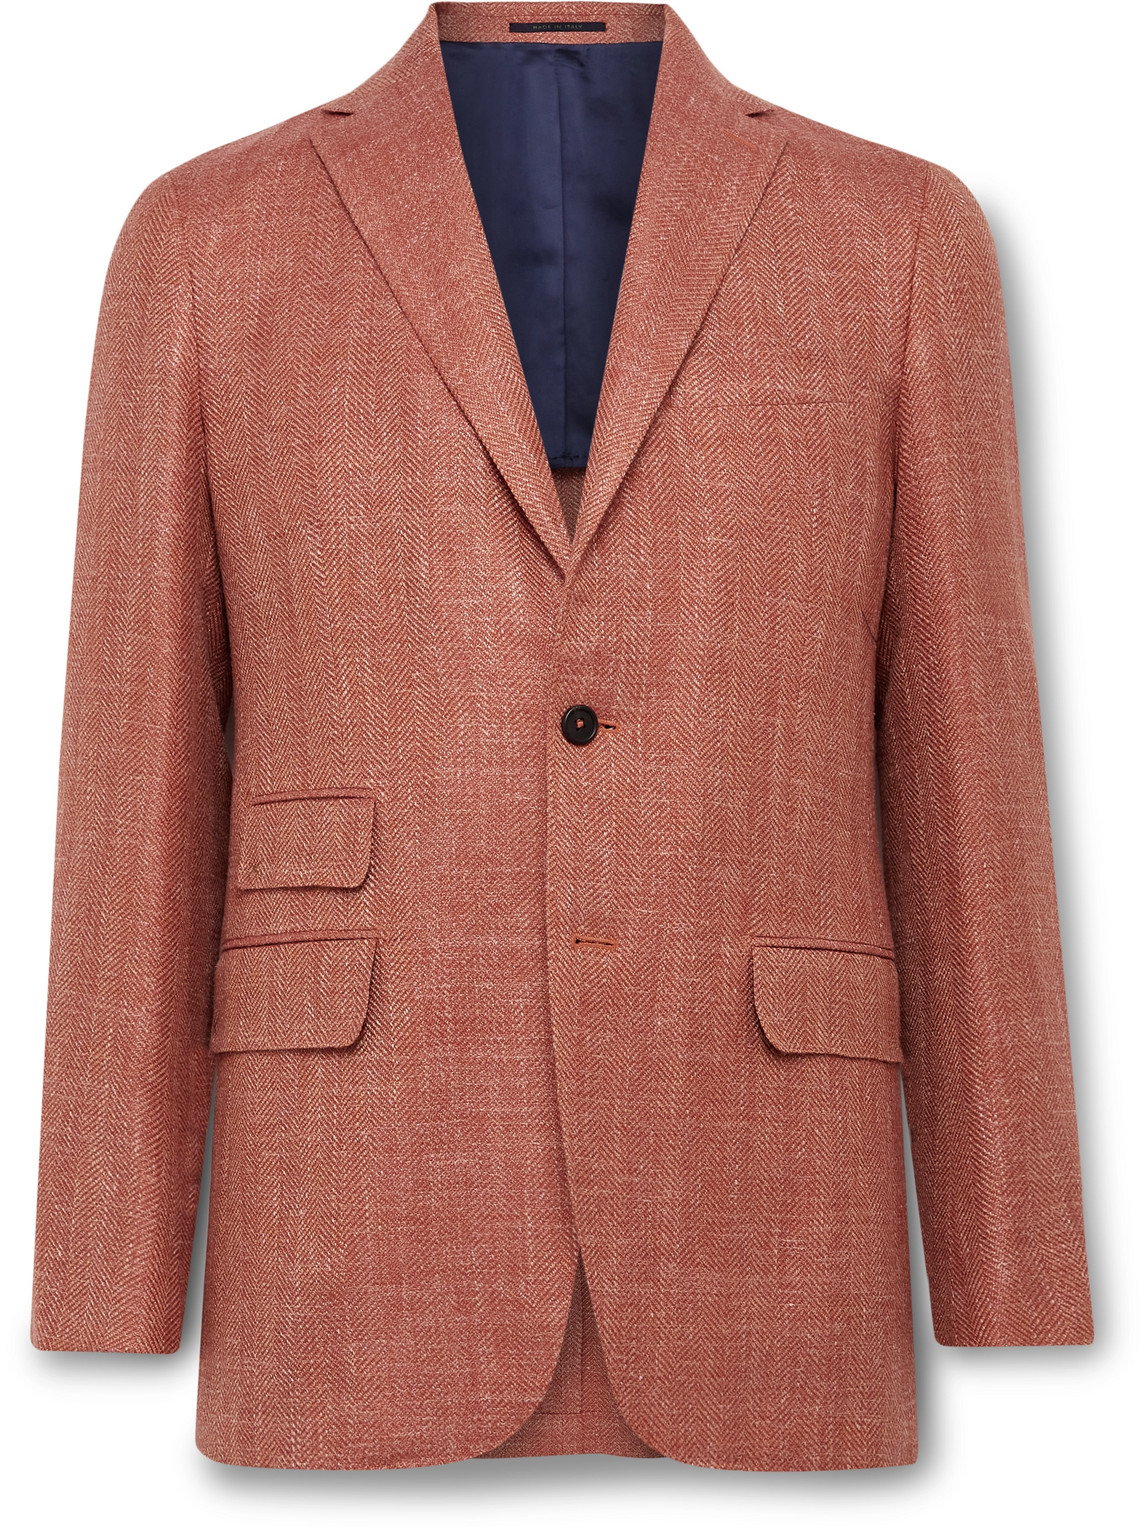 Kincaid No. 2 Slim-Fit Wool, Silk and Linen-Blend Hopsack Suit Jacket